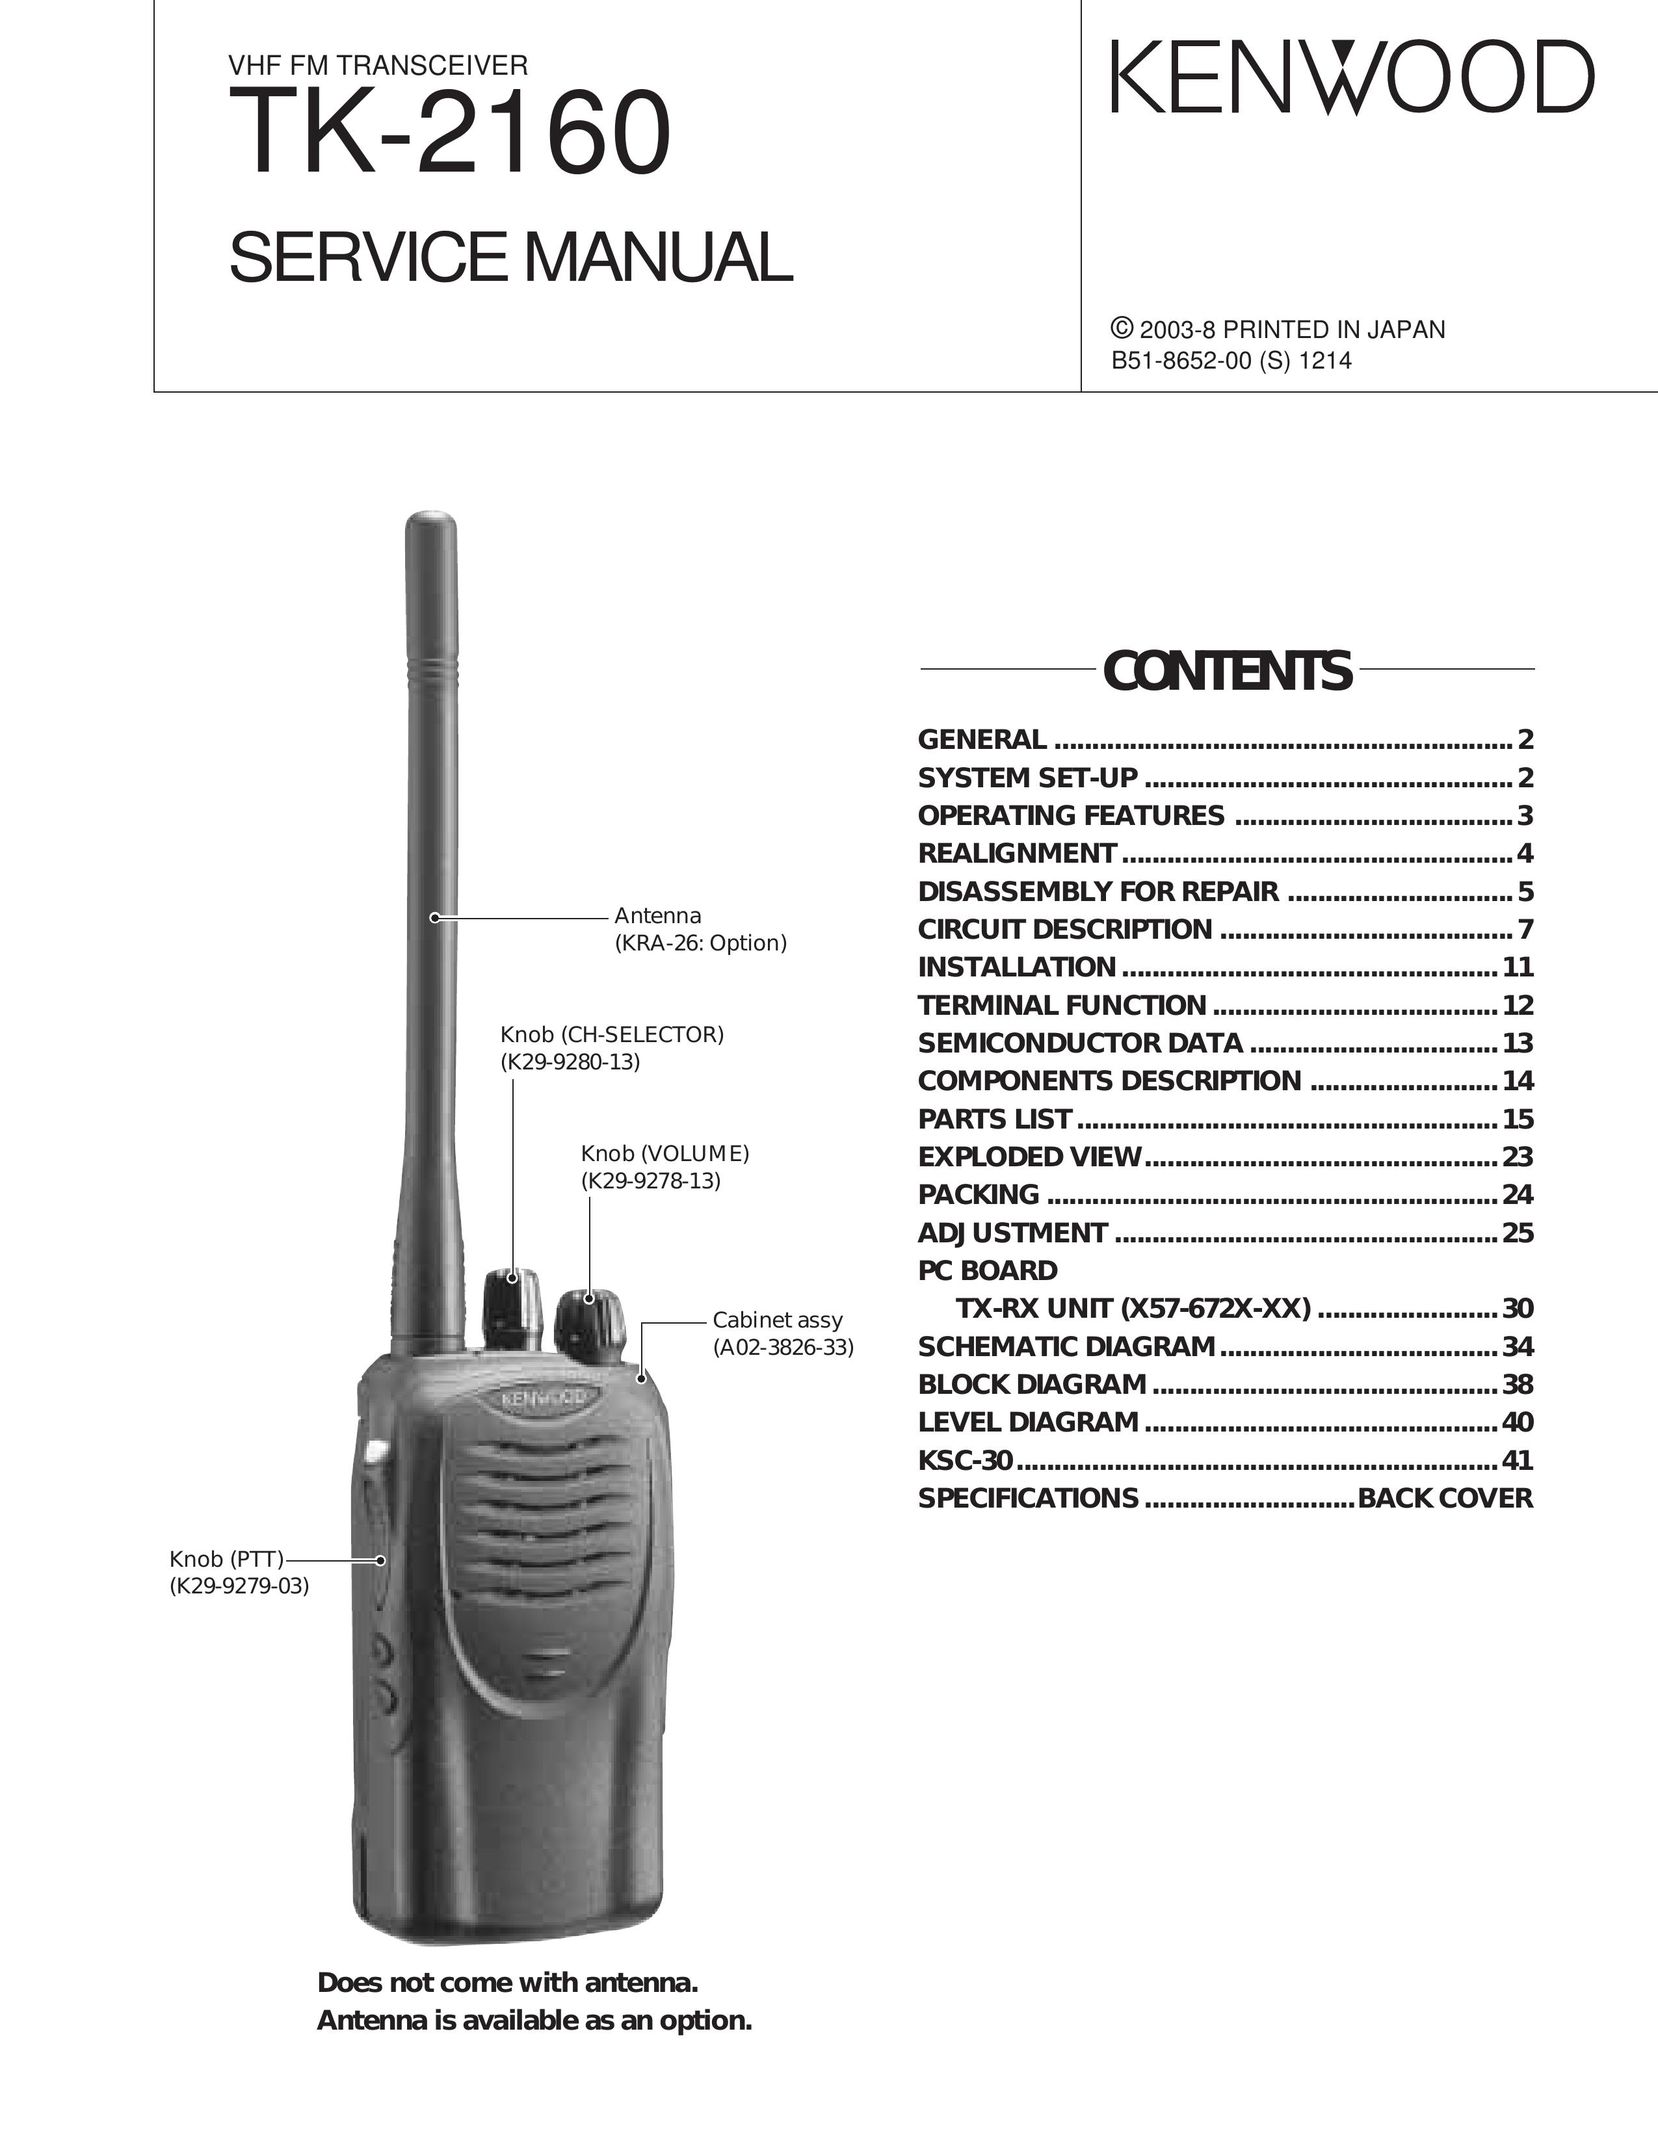 Kenwood M) Telephone User Manual